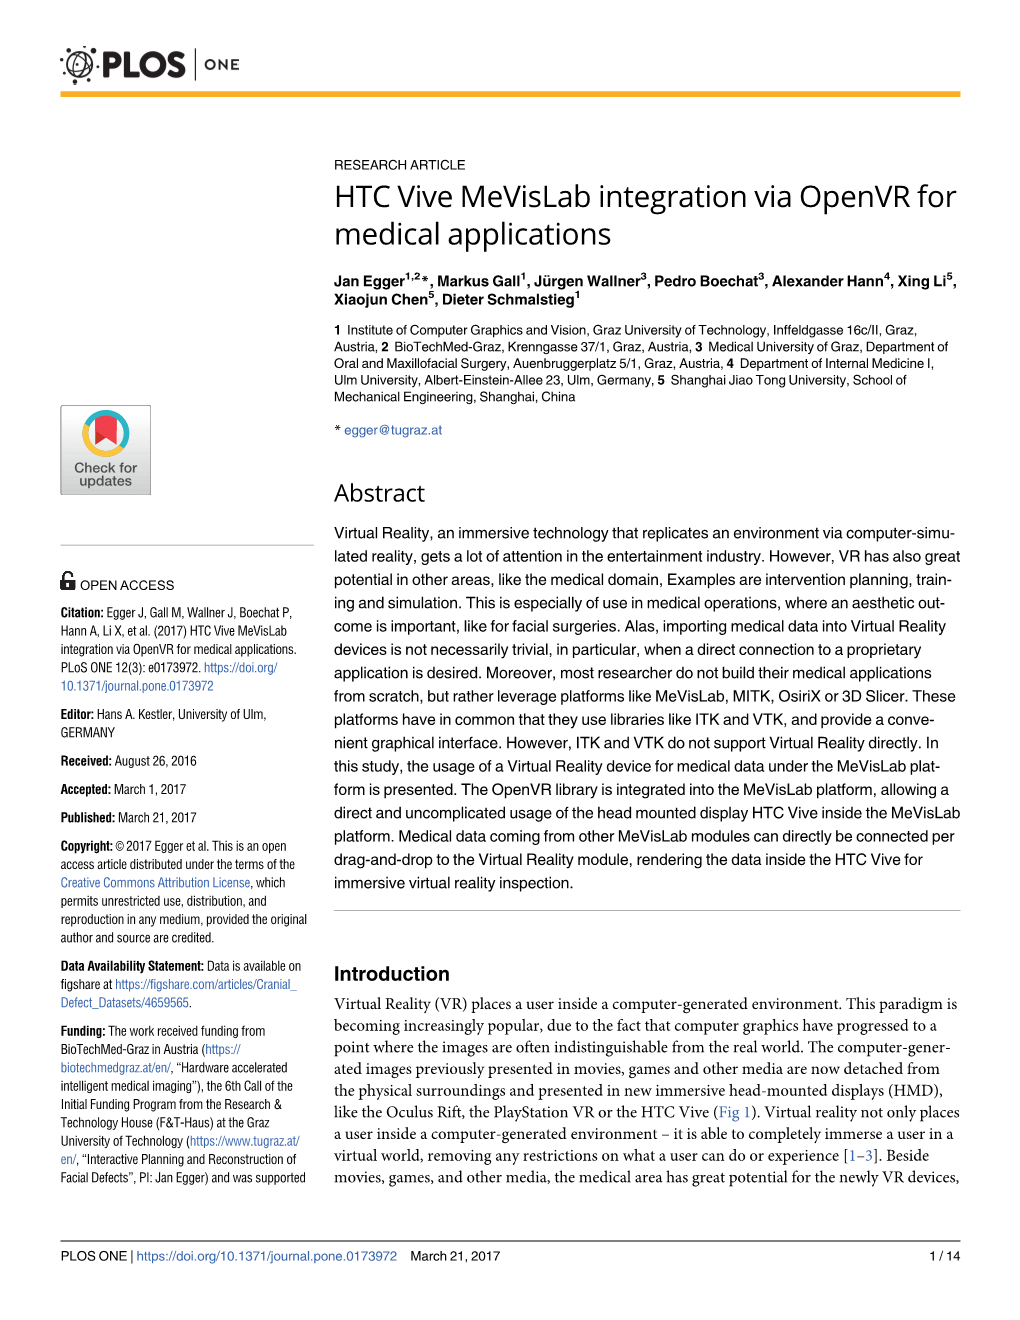 HTC Vive Mevislab Integration Via Openvr for Medical Applications